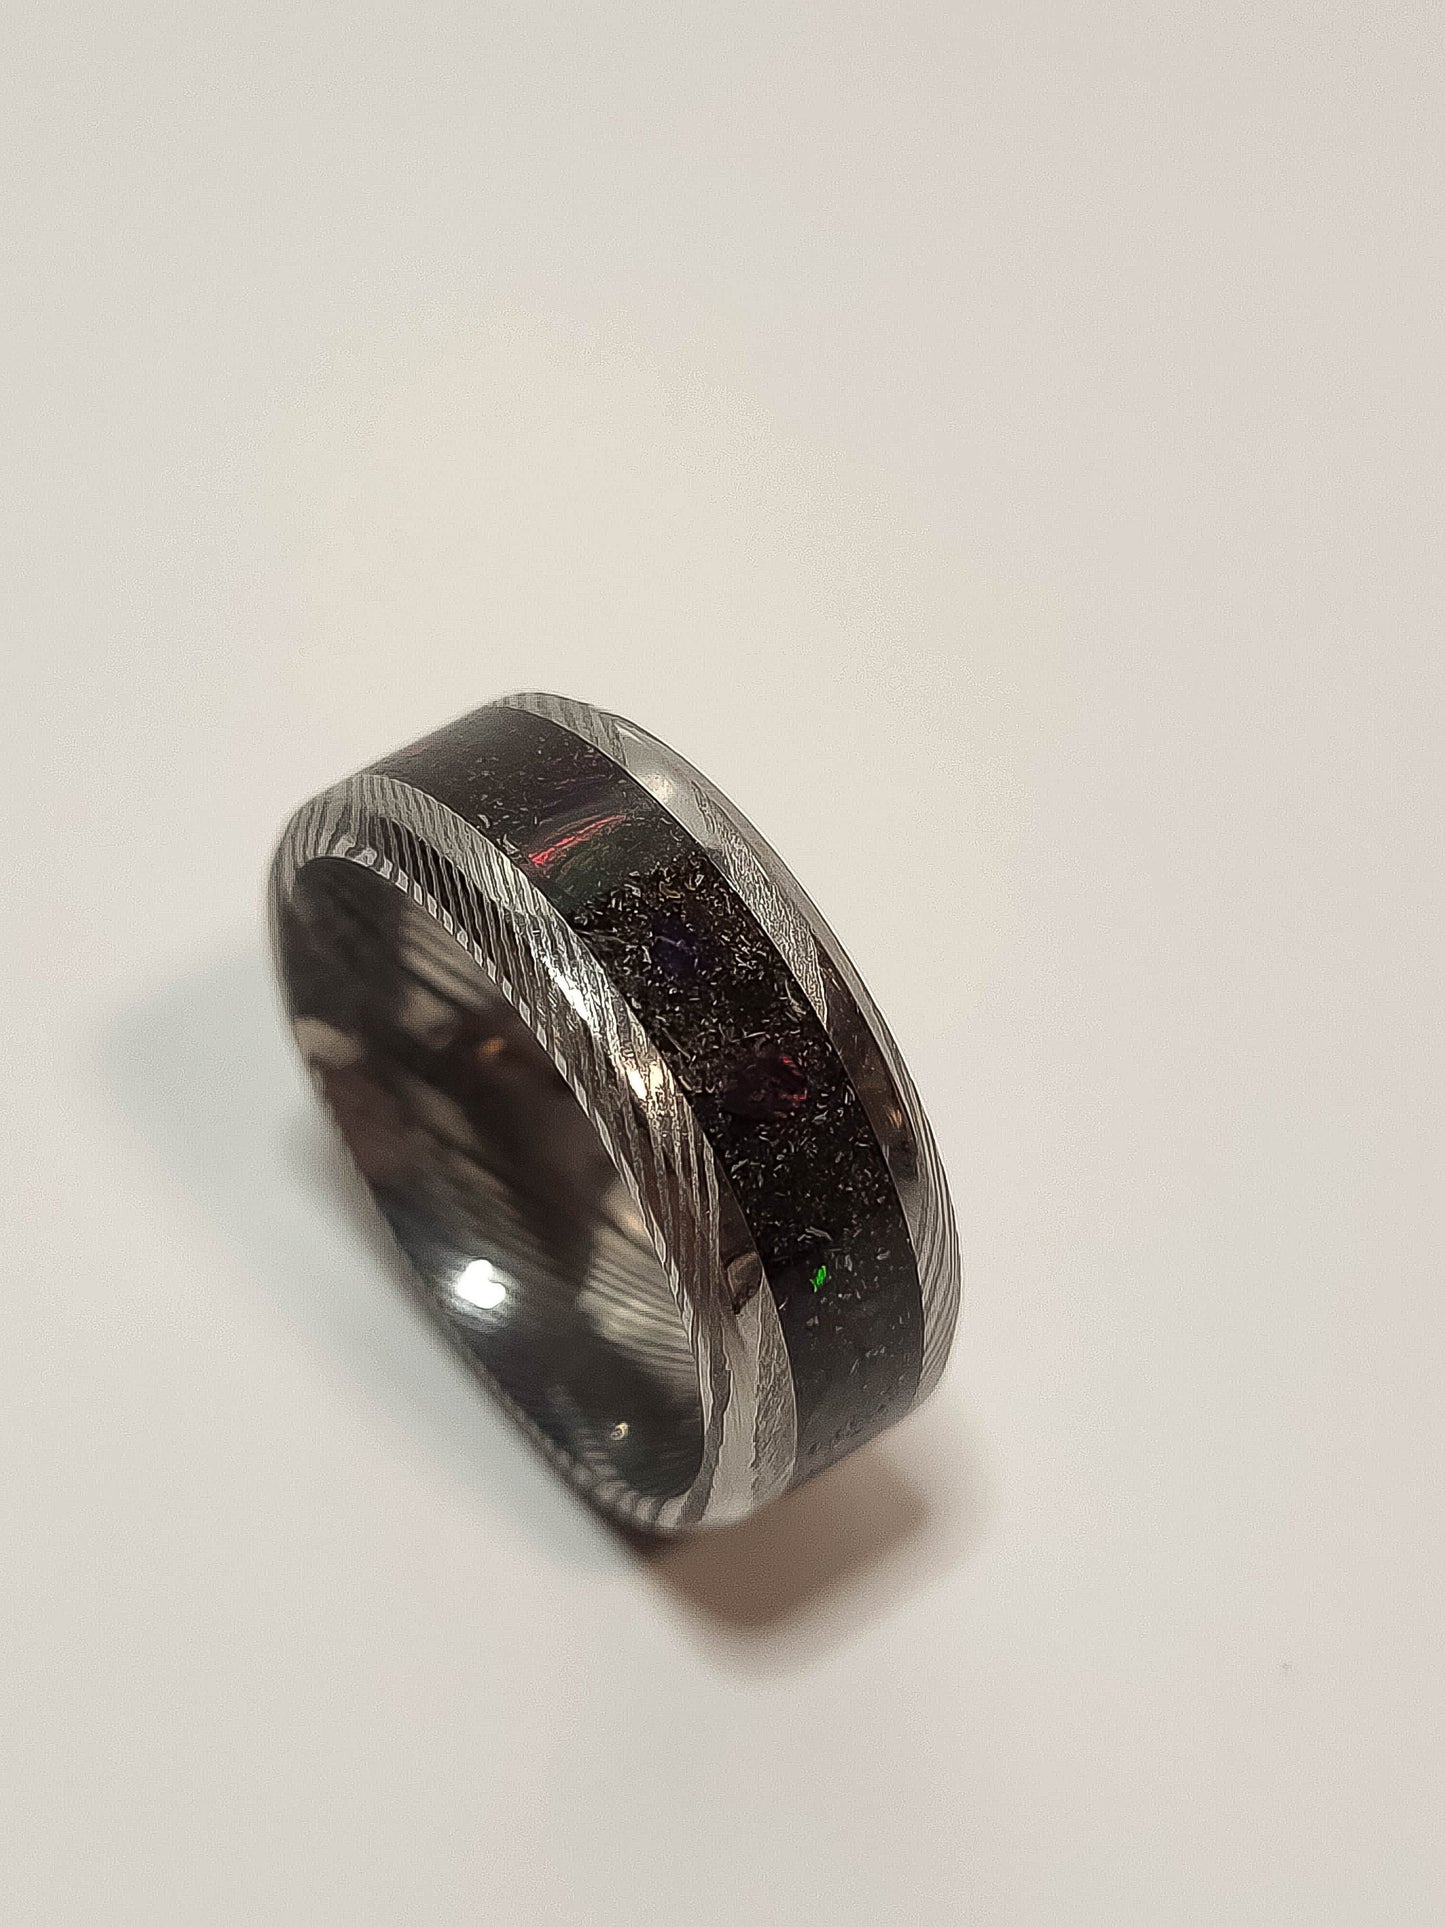 Damascus Steel Ring, Black Fire Opal, Meteorite Shavings